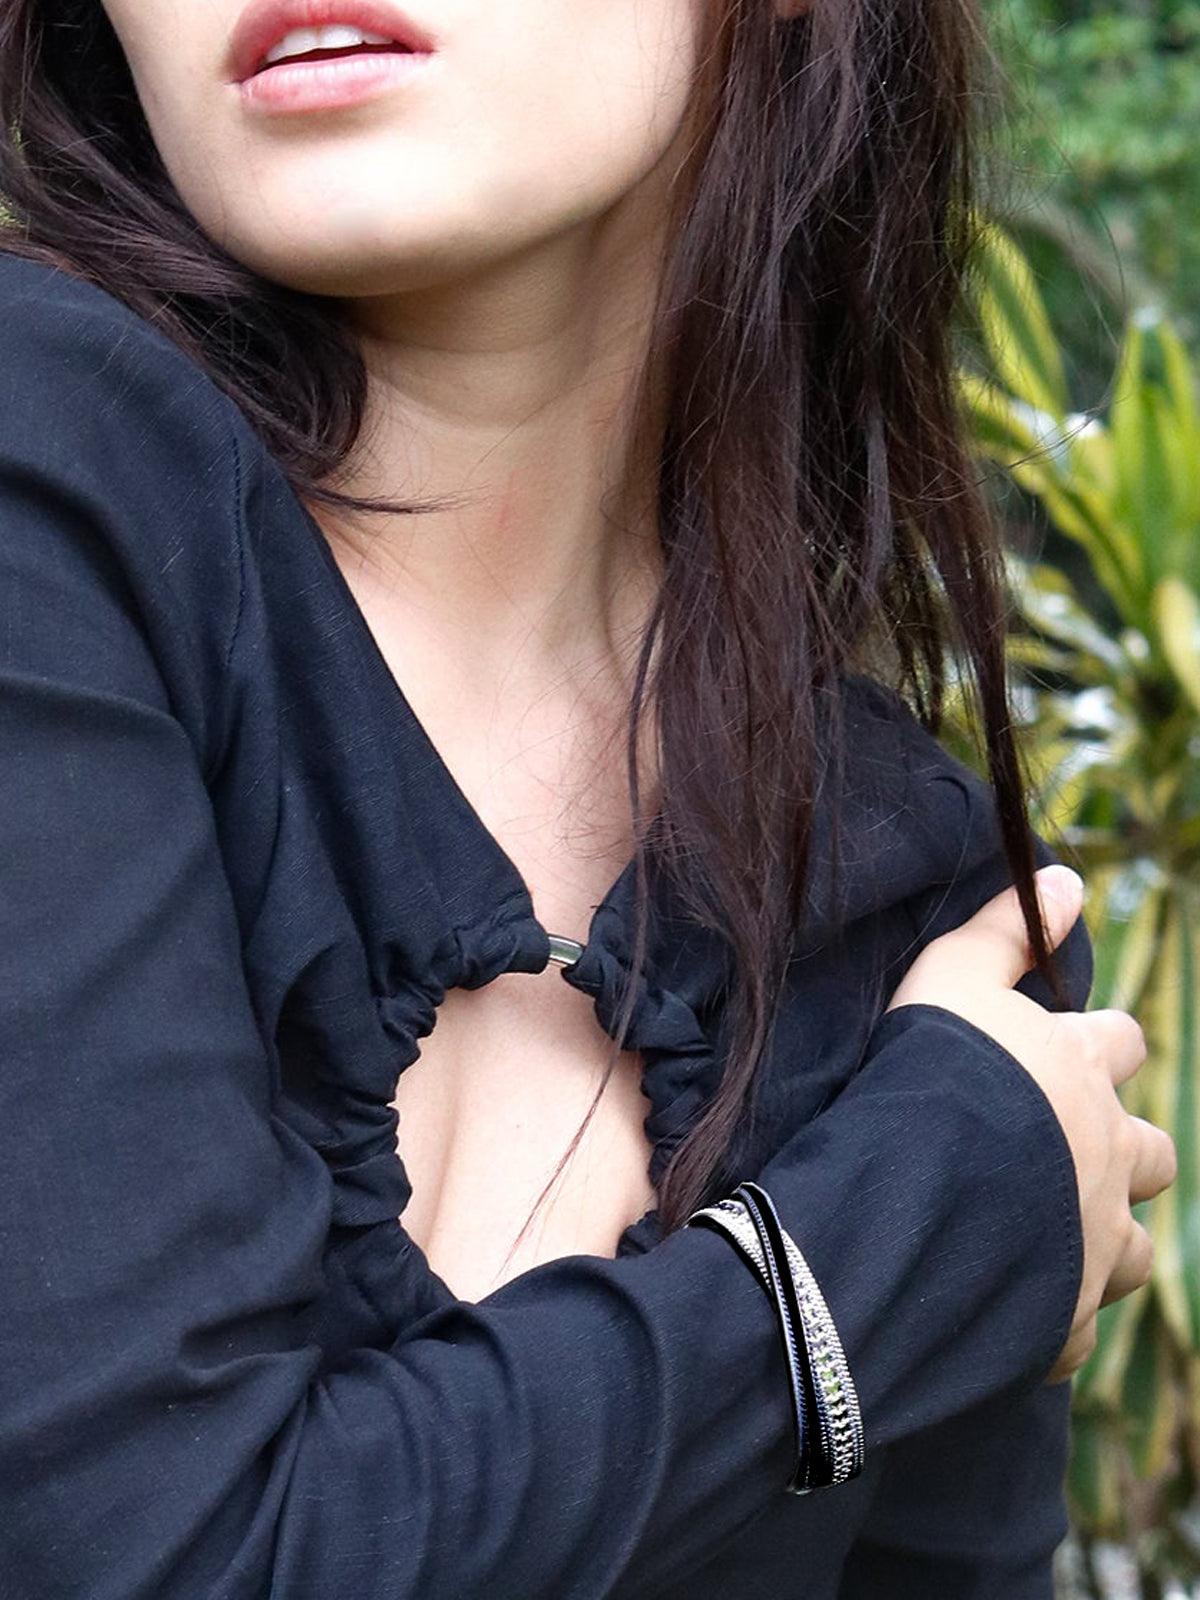 Women's Jet Black Crystal-Studded Bracelet G - Odette